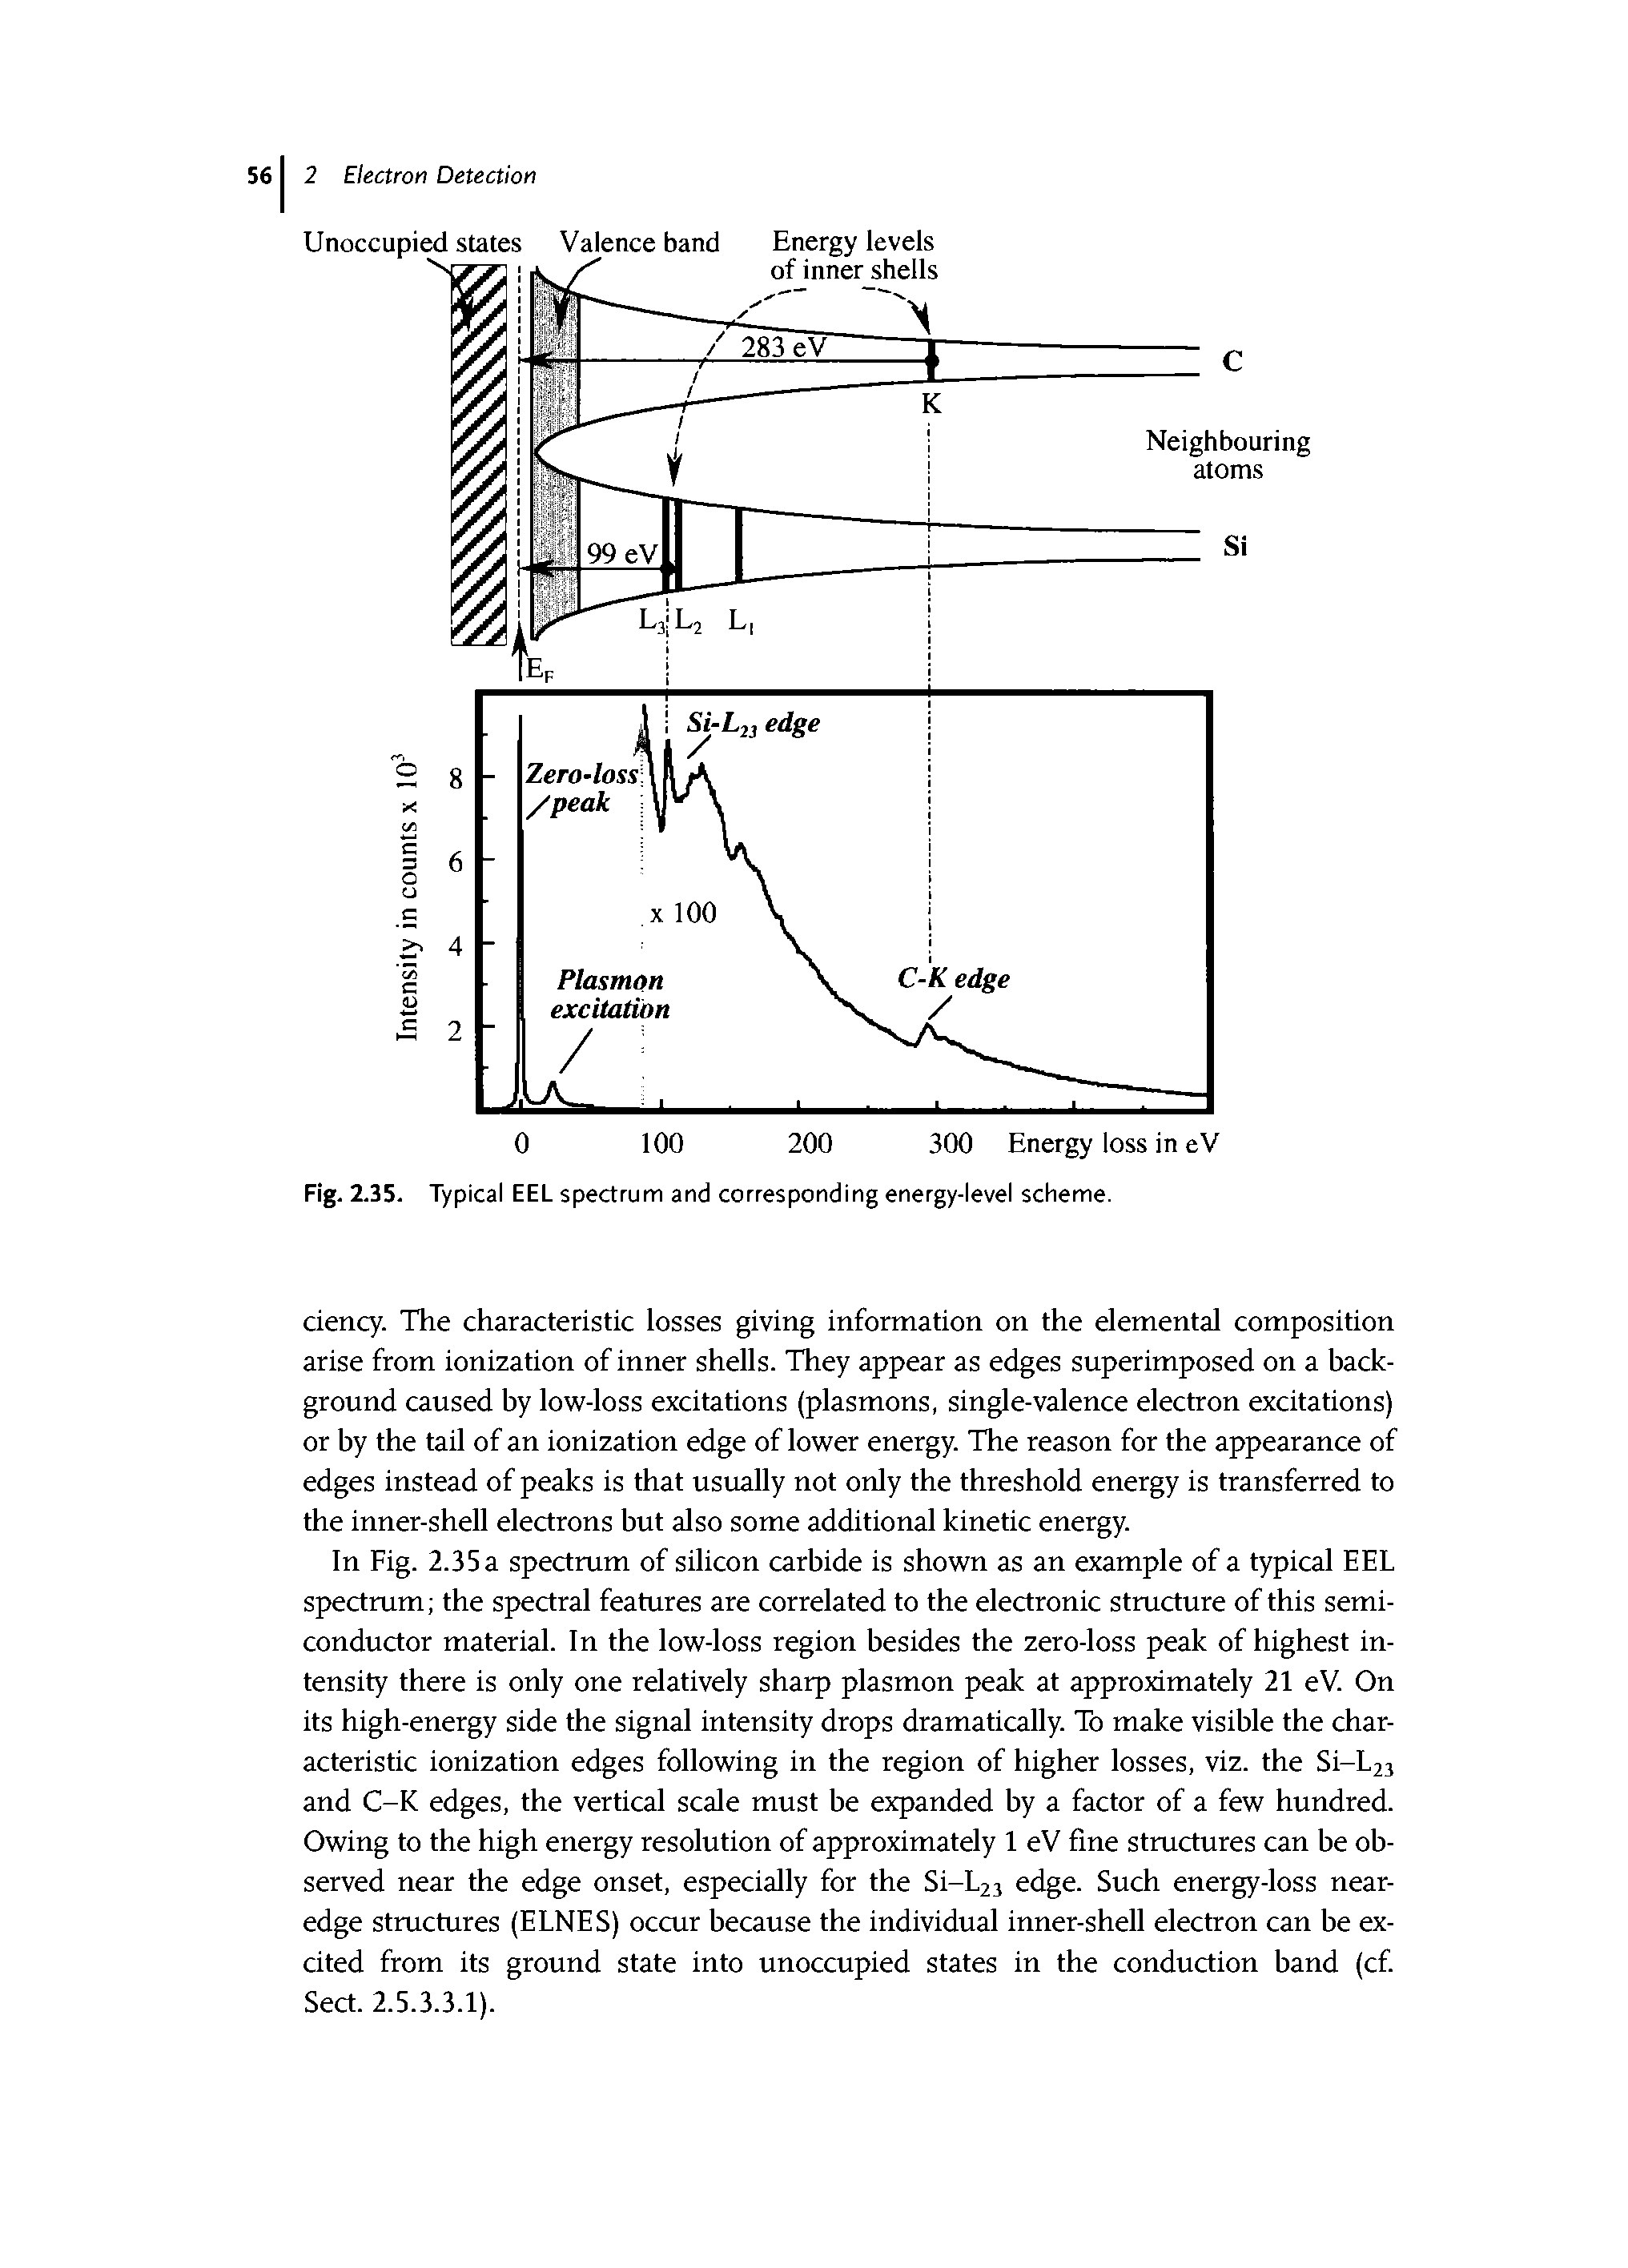 Fig. 2.35. Typical EEL spectrum and corresponding energy-level scheme.